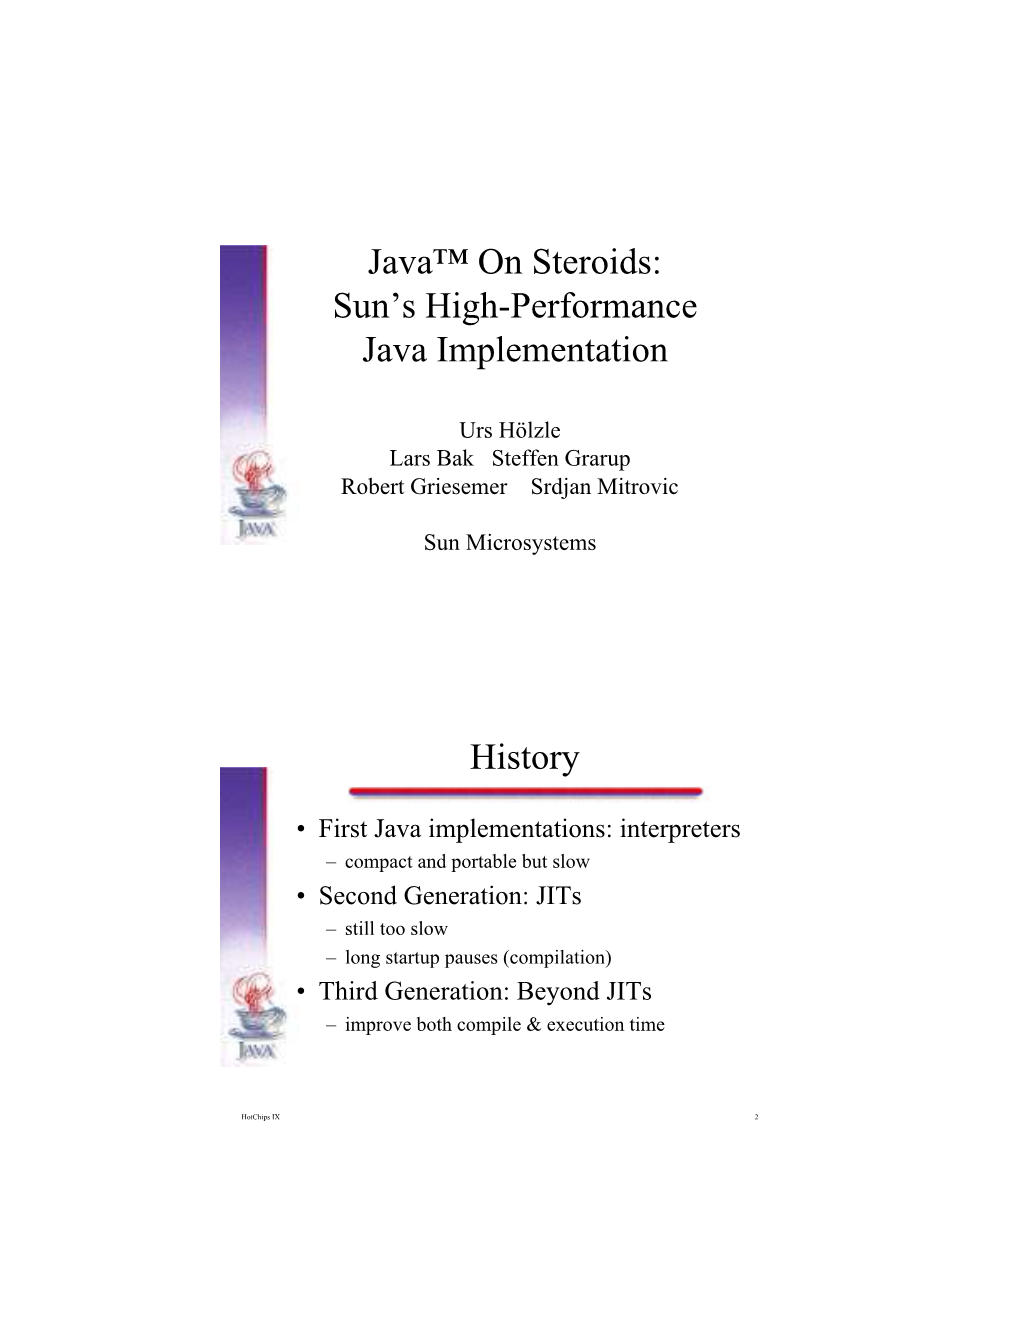 Java™ on Steroids: Sun’S High-Performance Java Implementation